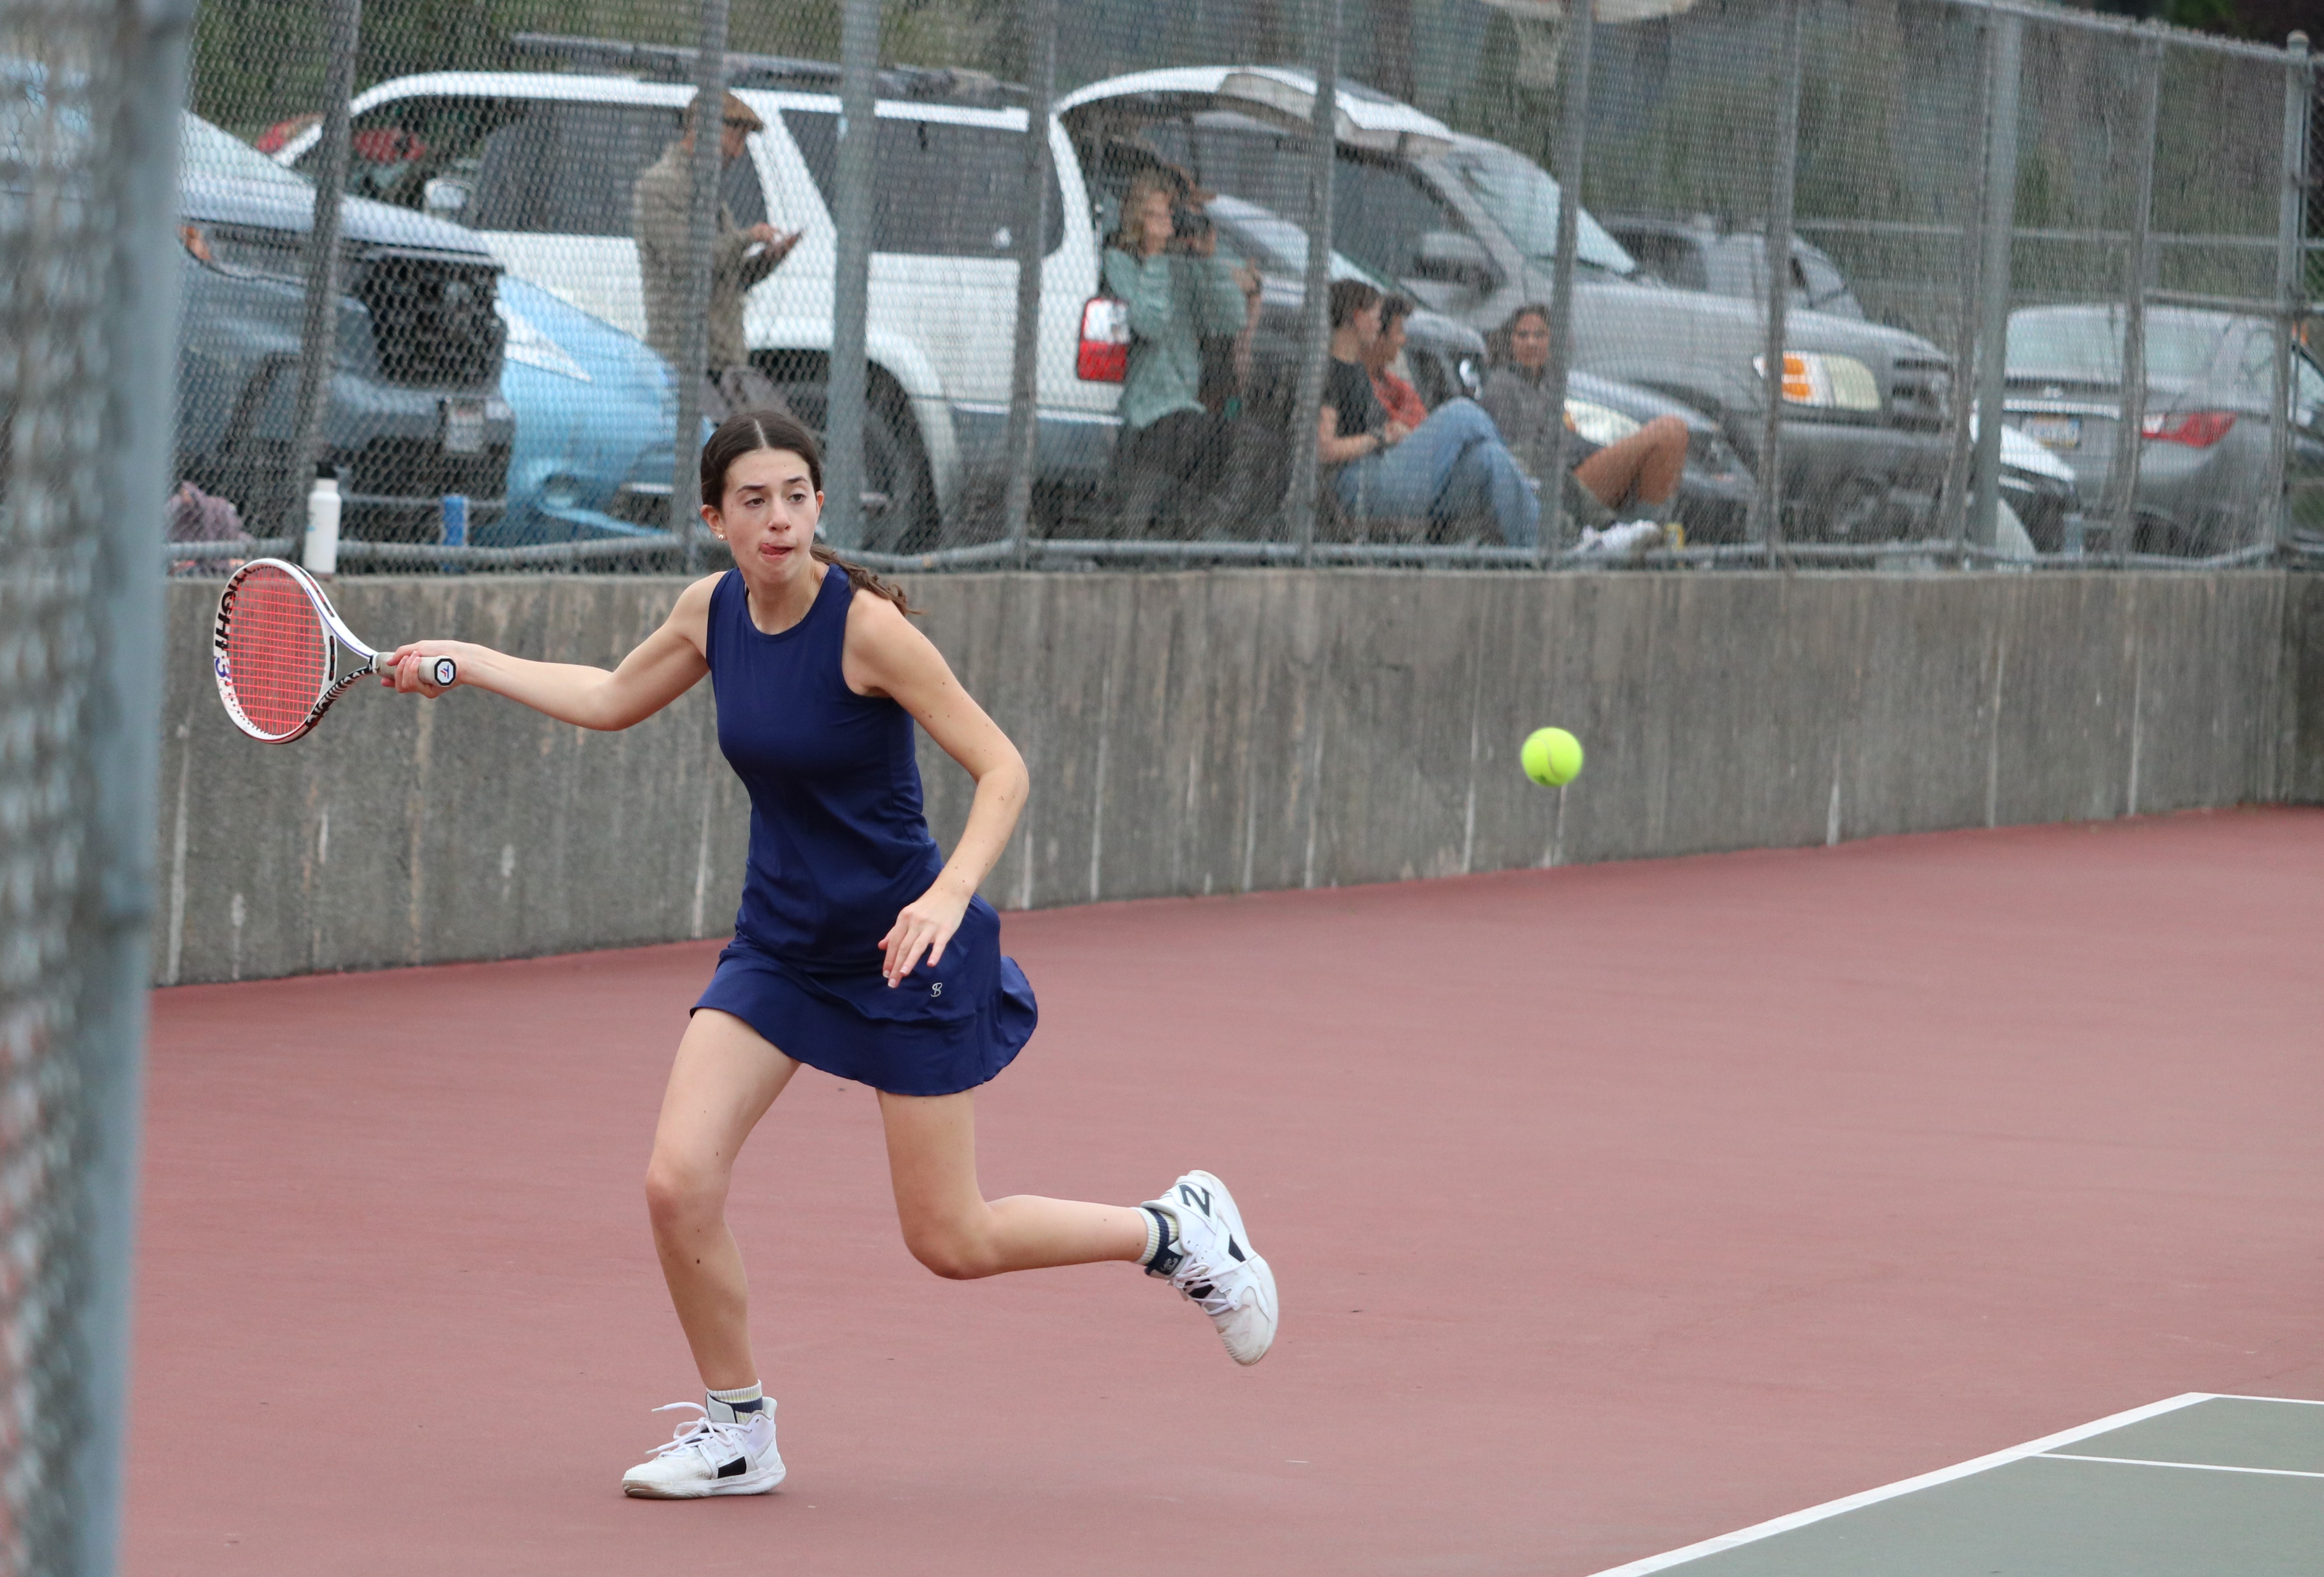 High school athlete plays tennis in a navy uniform. 